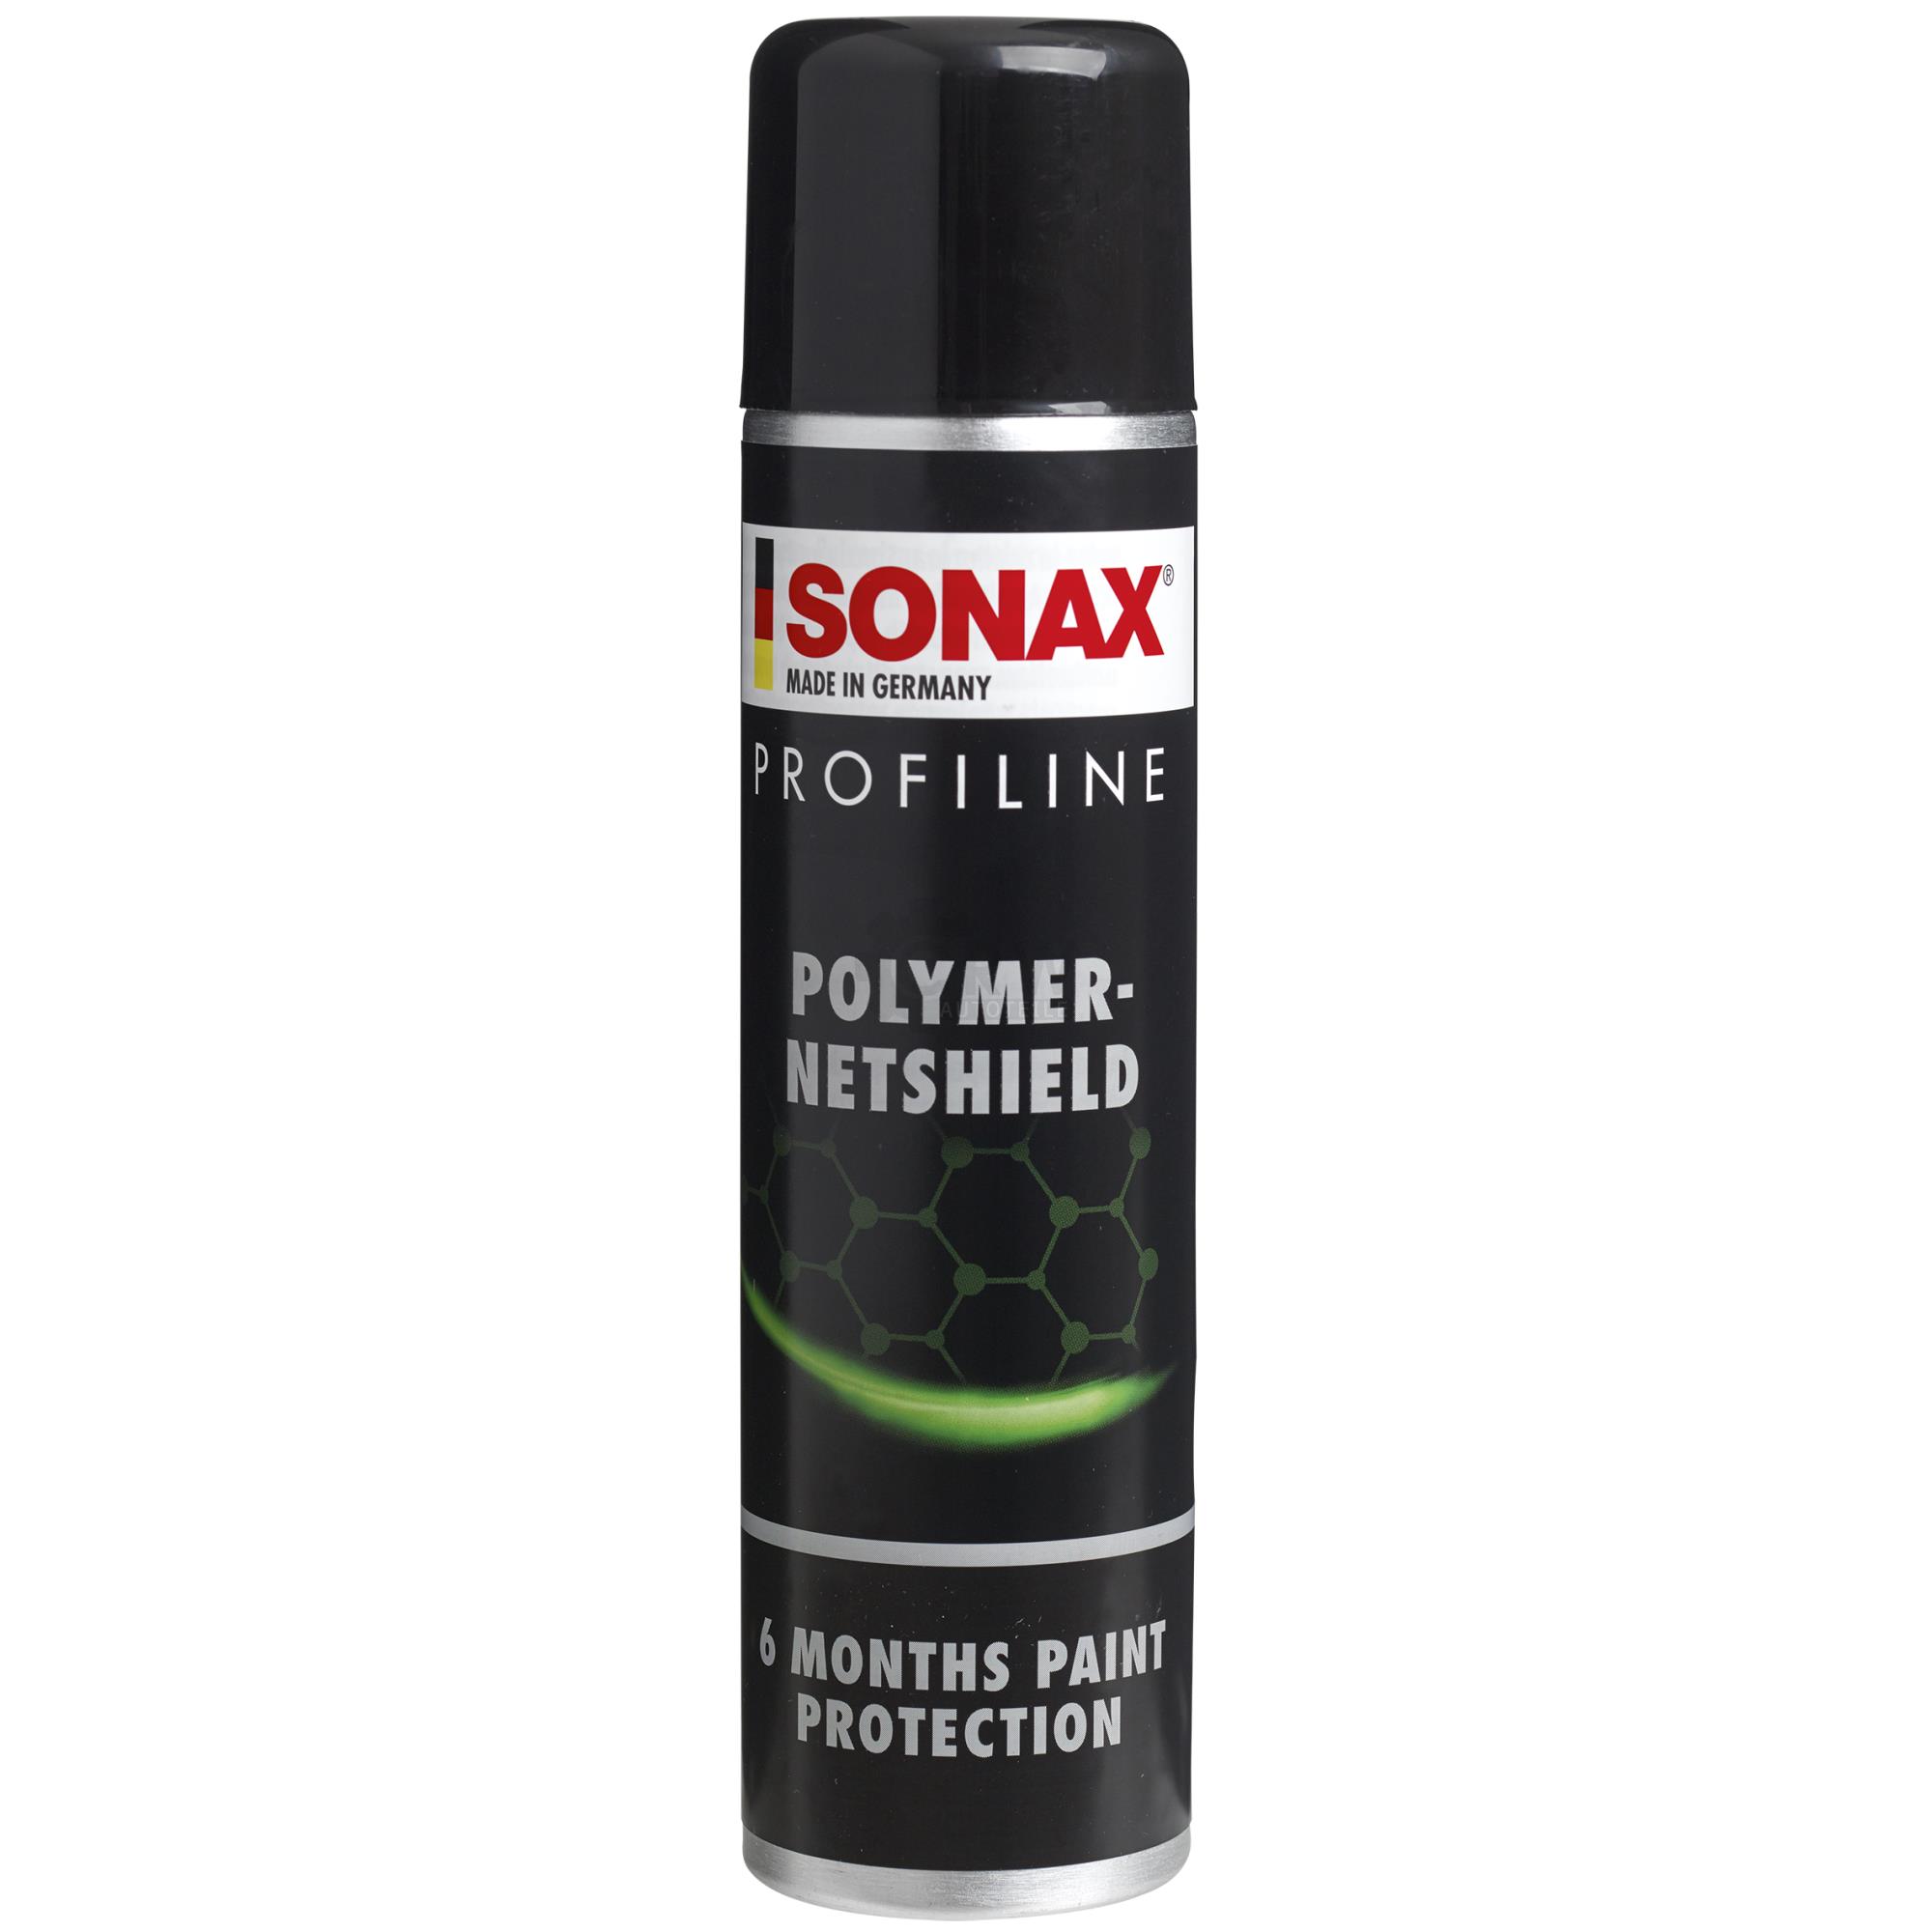 SONAX PROFILINE PolymerNetShield Polymer Lackversiegelung Wachsfreie 340 ml